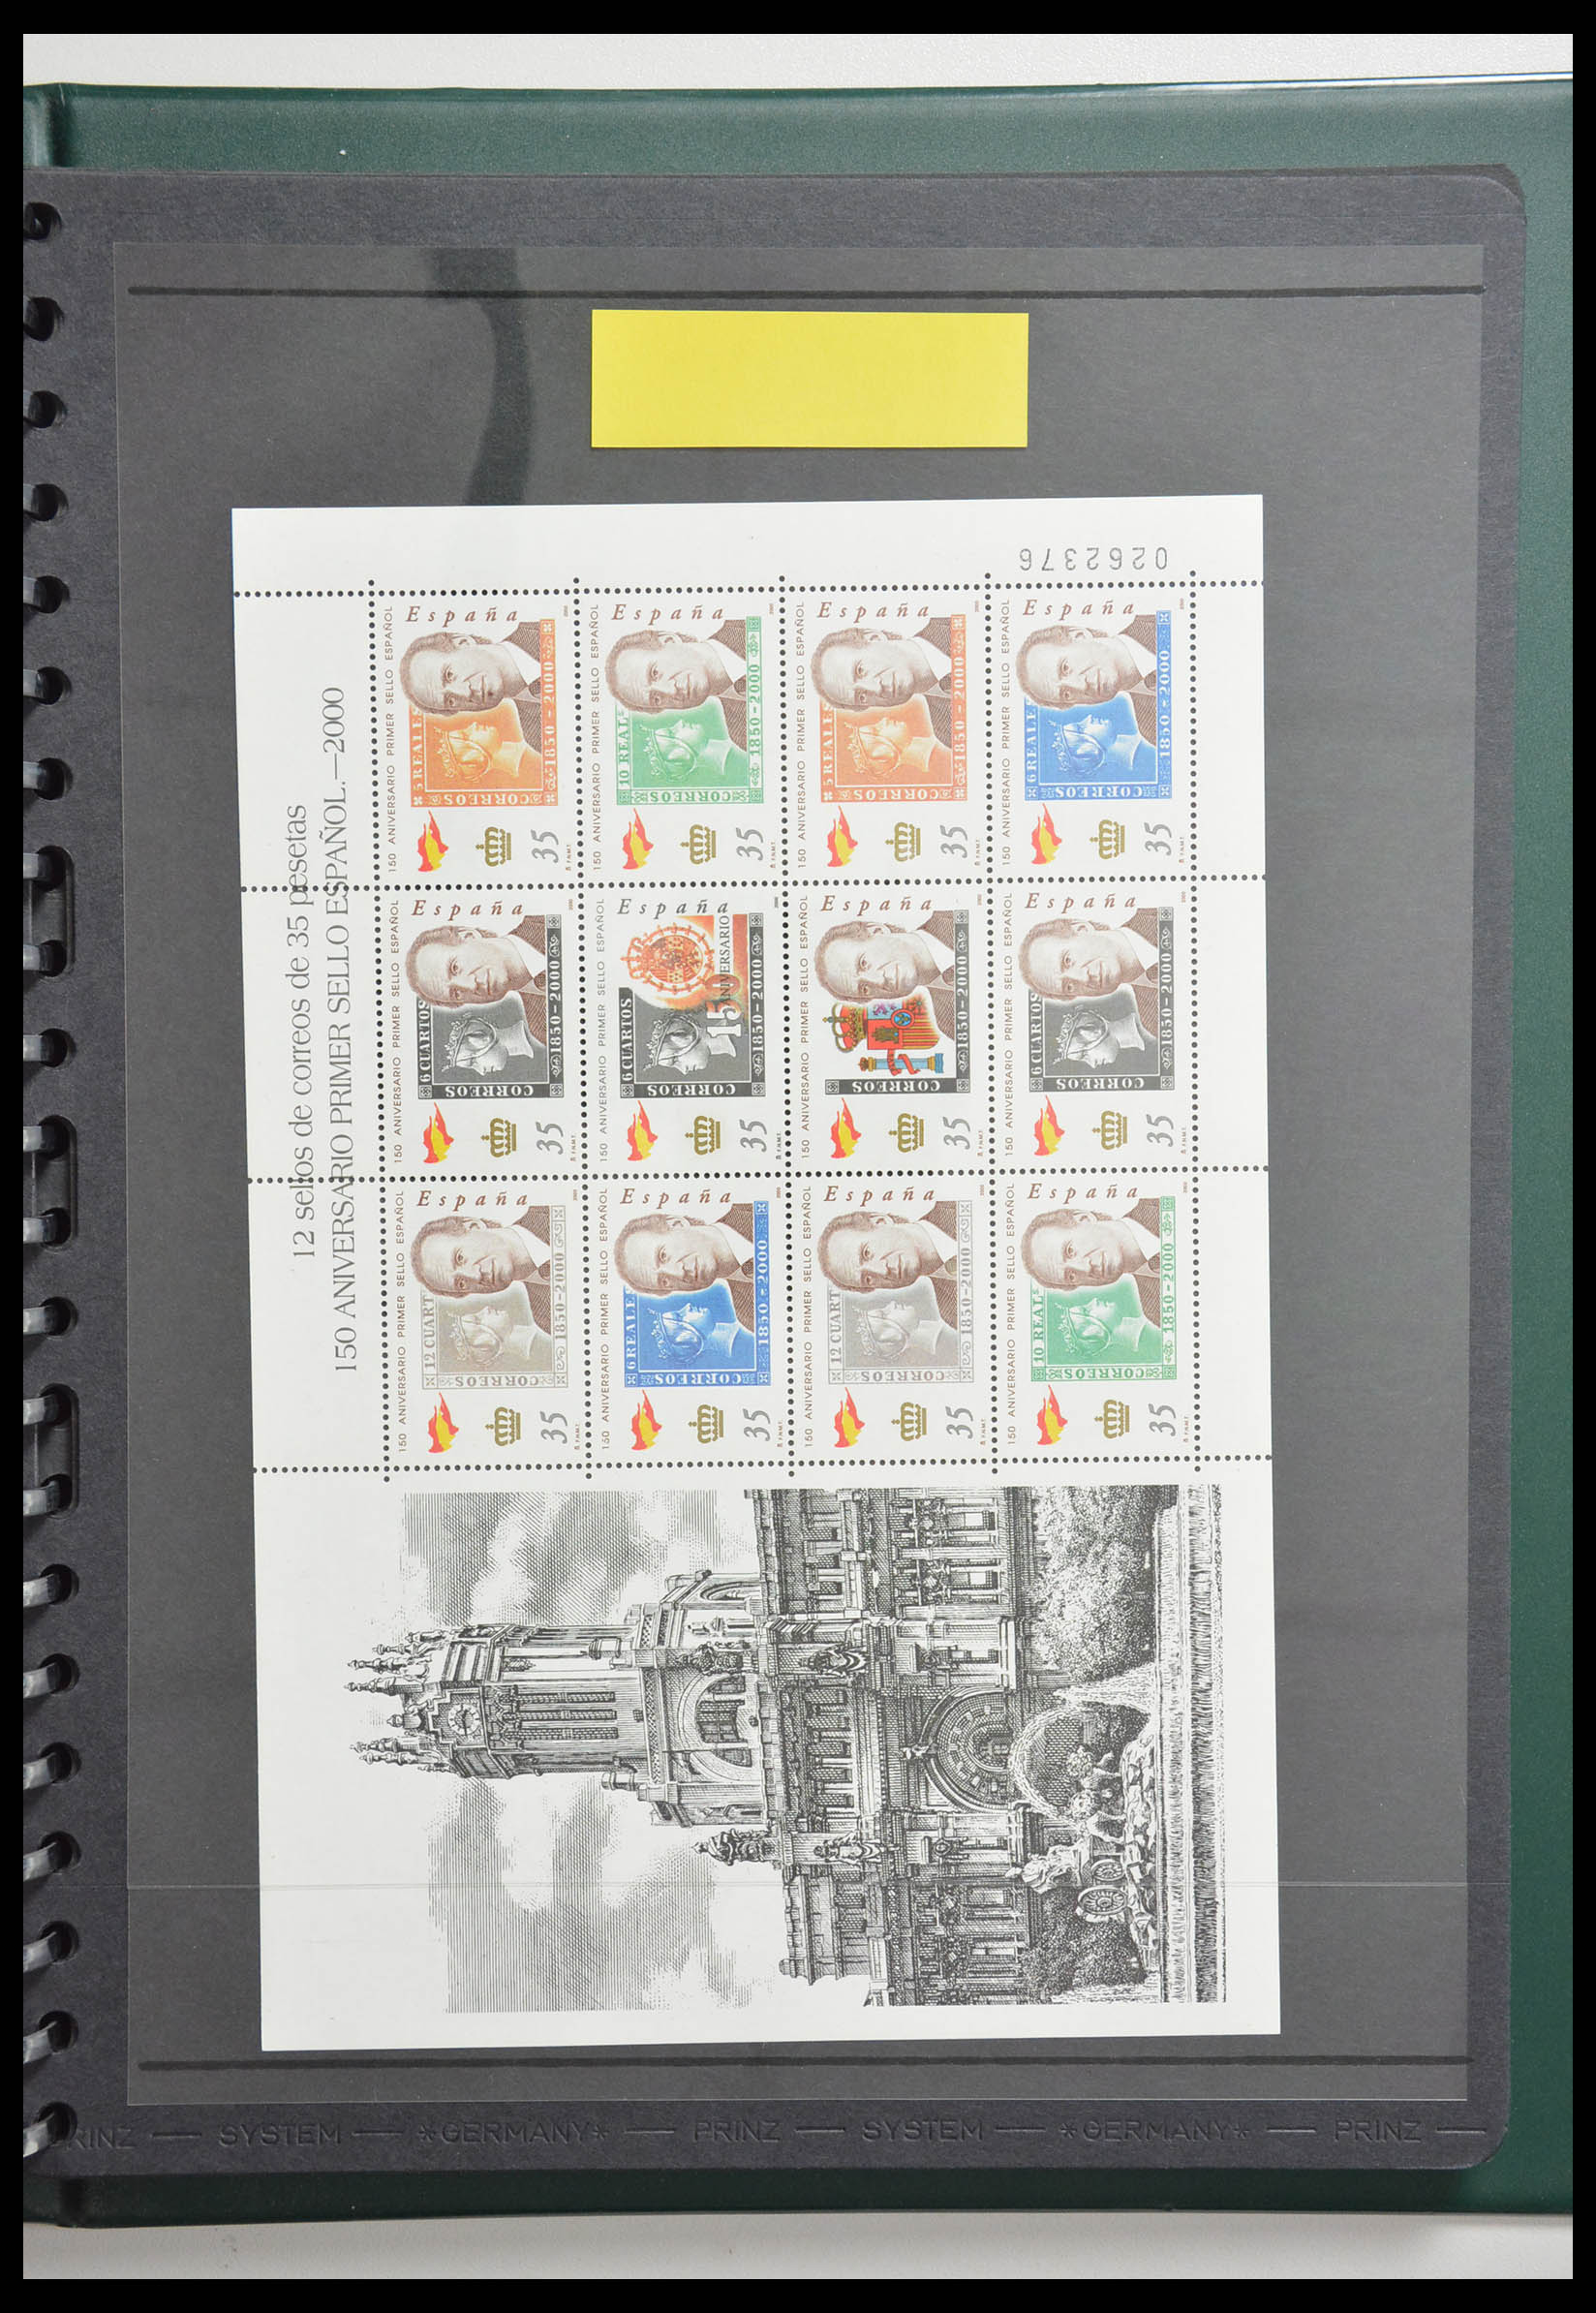 28337 032 - 28337 Stamp on stamp 1840-2001.